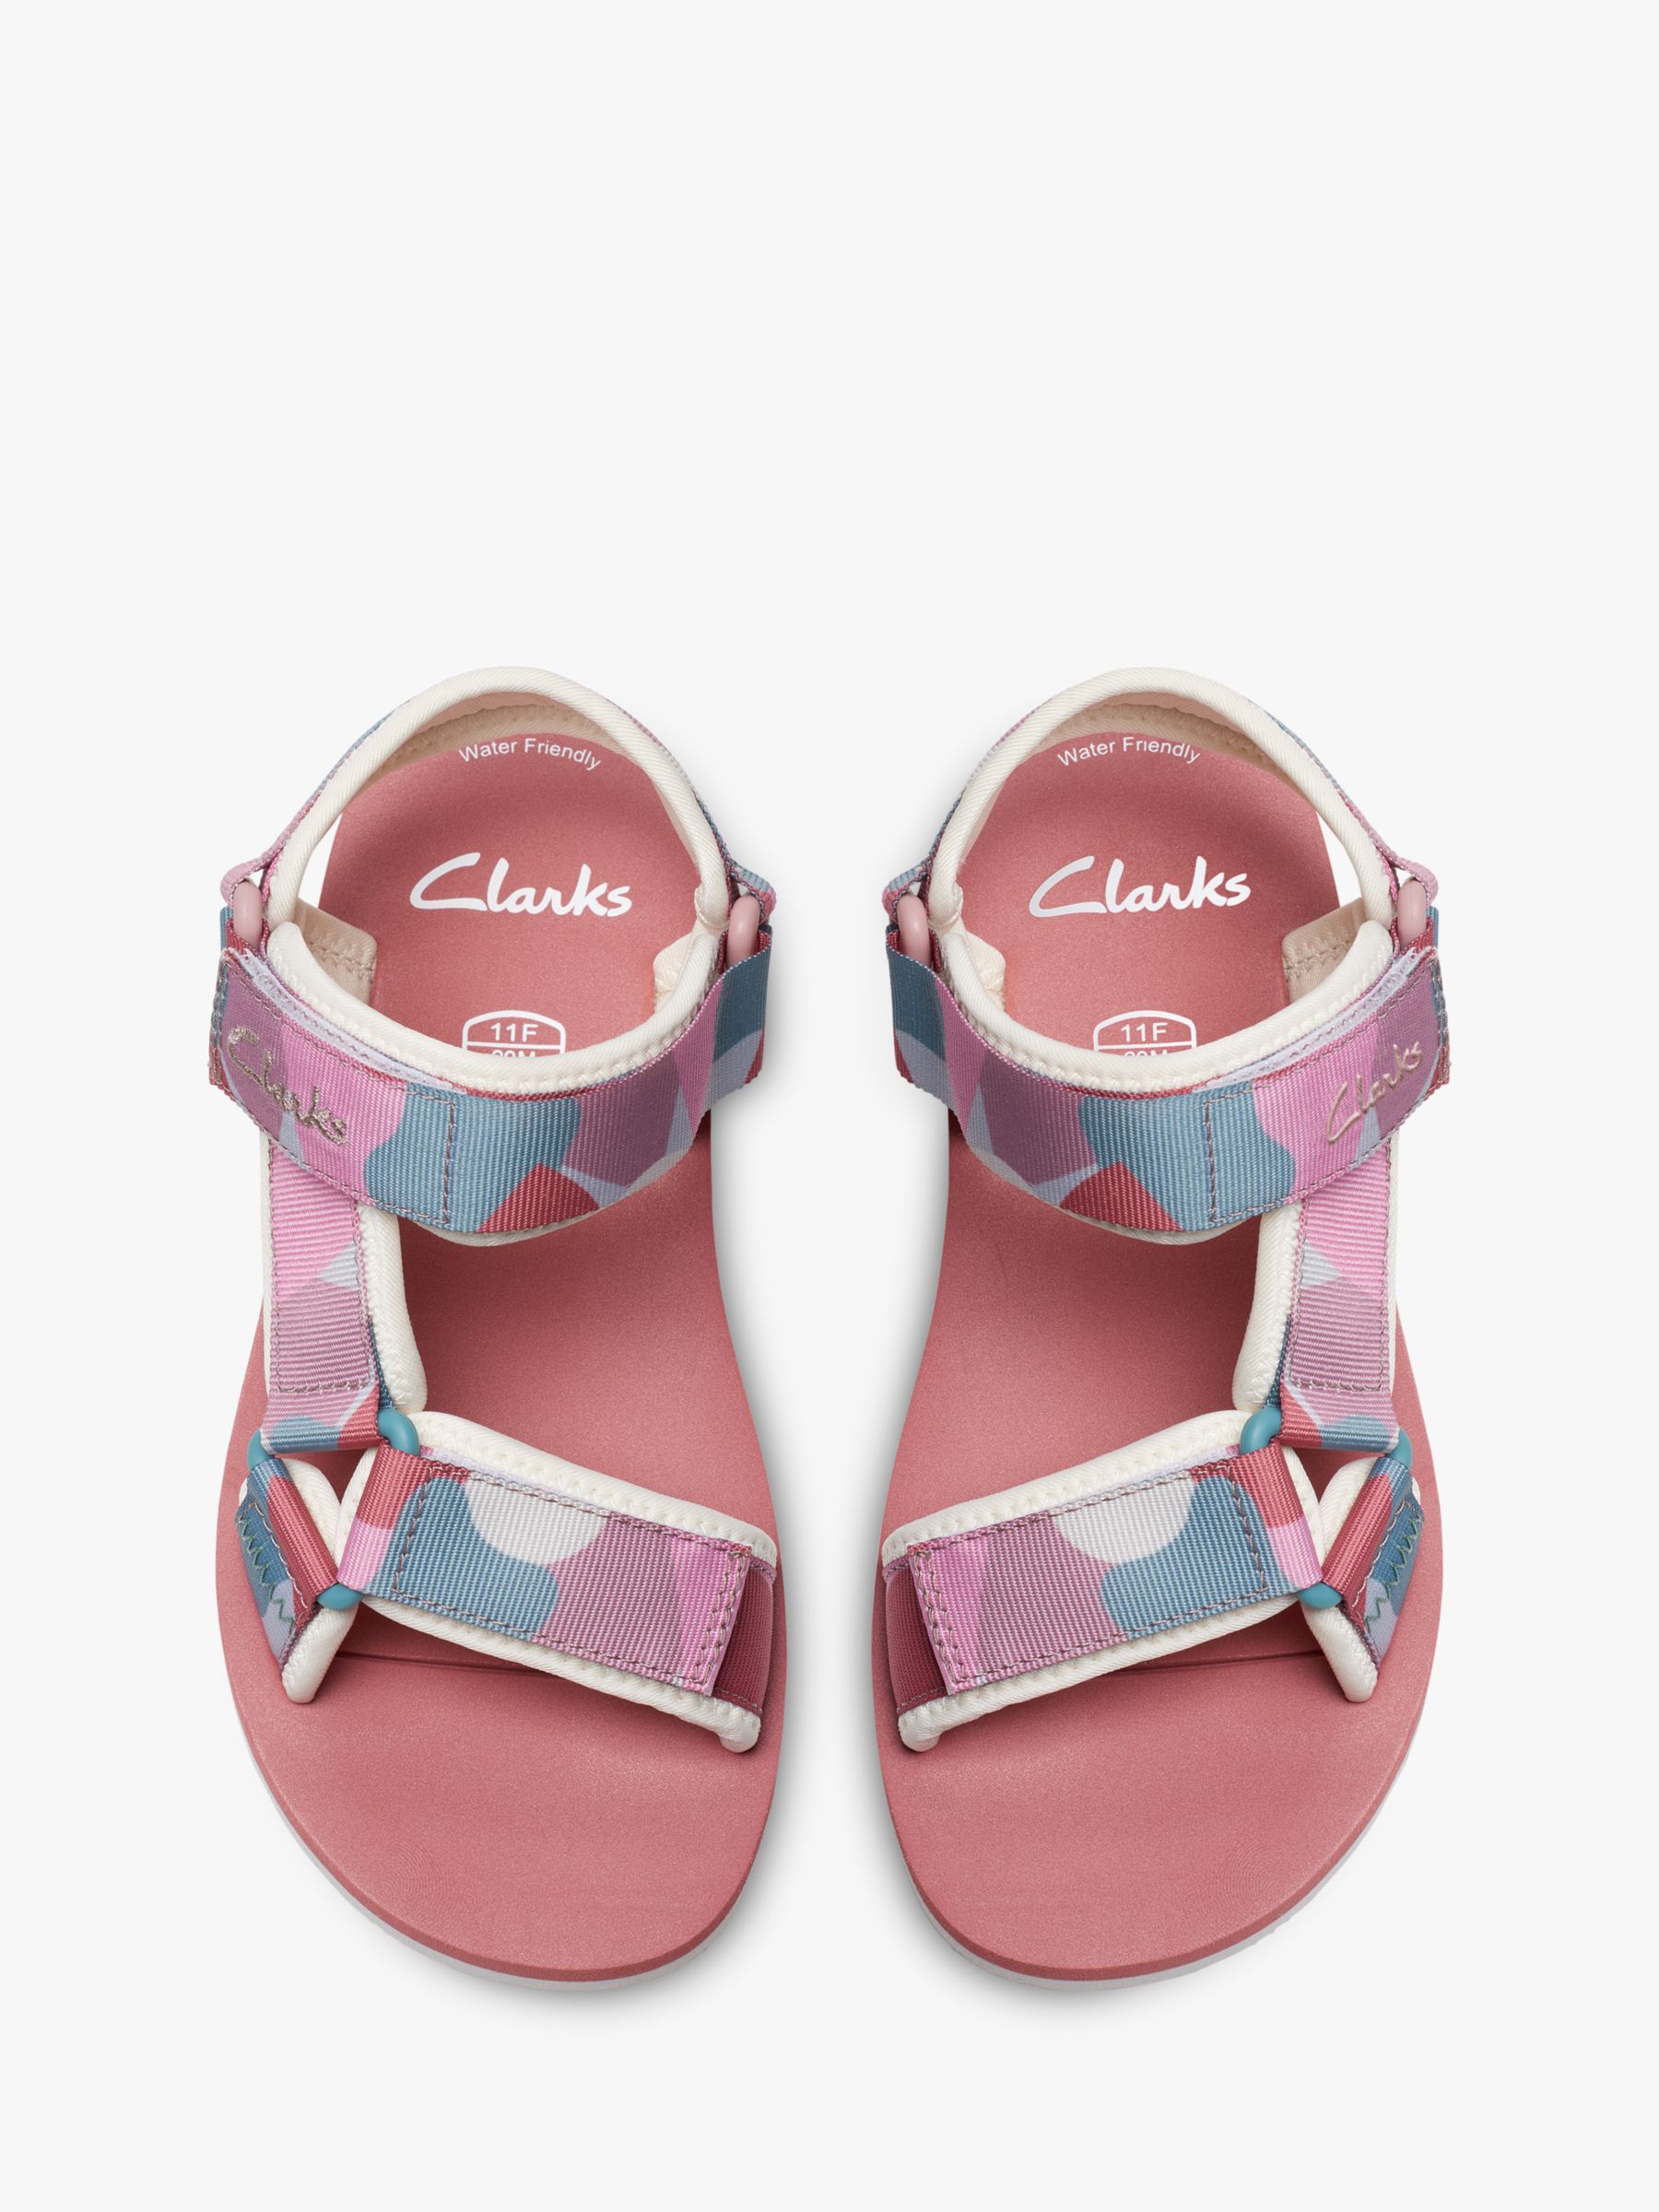 Clarks Kids' Peak Web Water Resistant Sandals, Pink/Multi, 12.5F Jnr